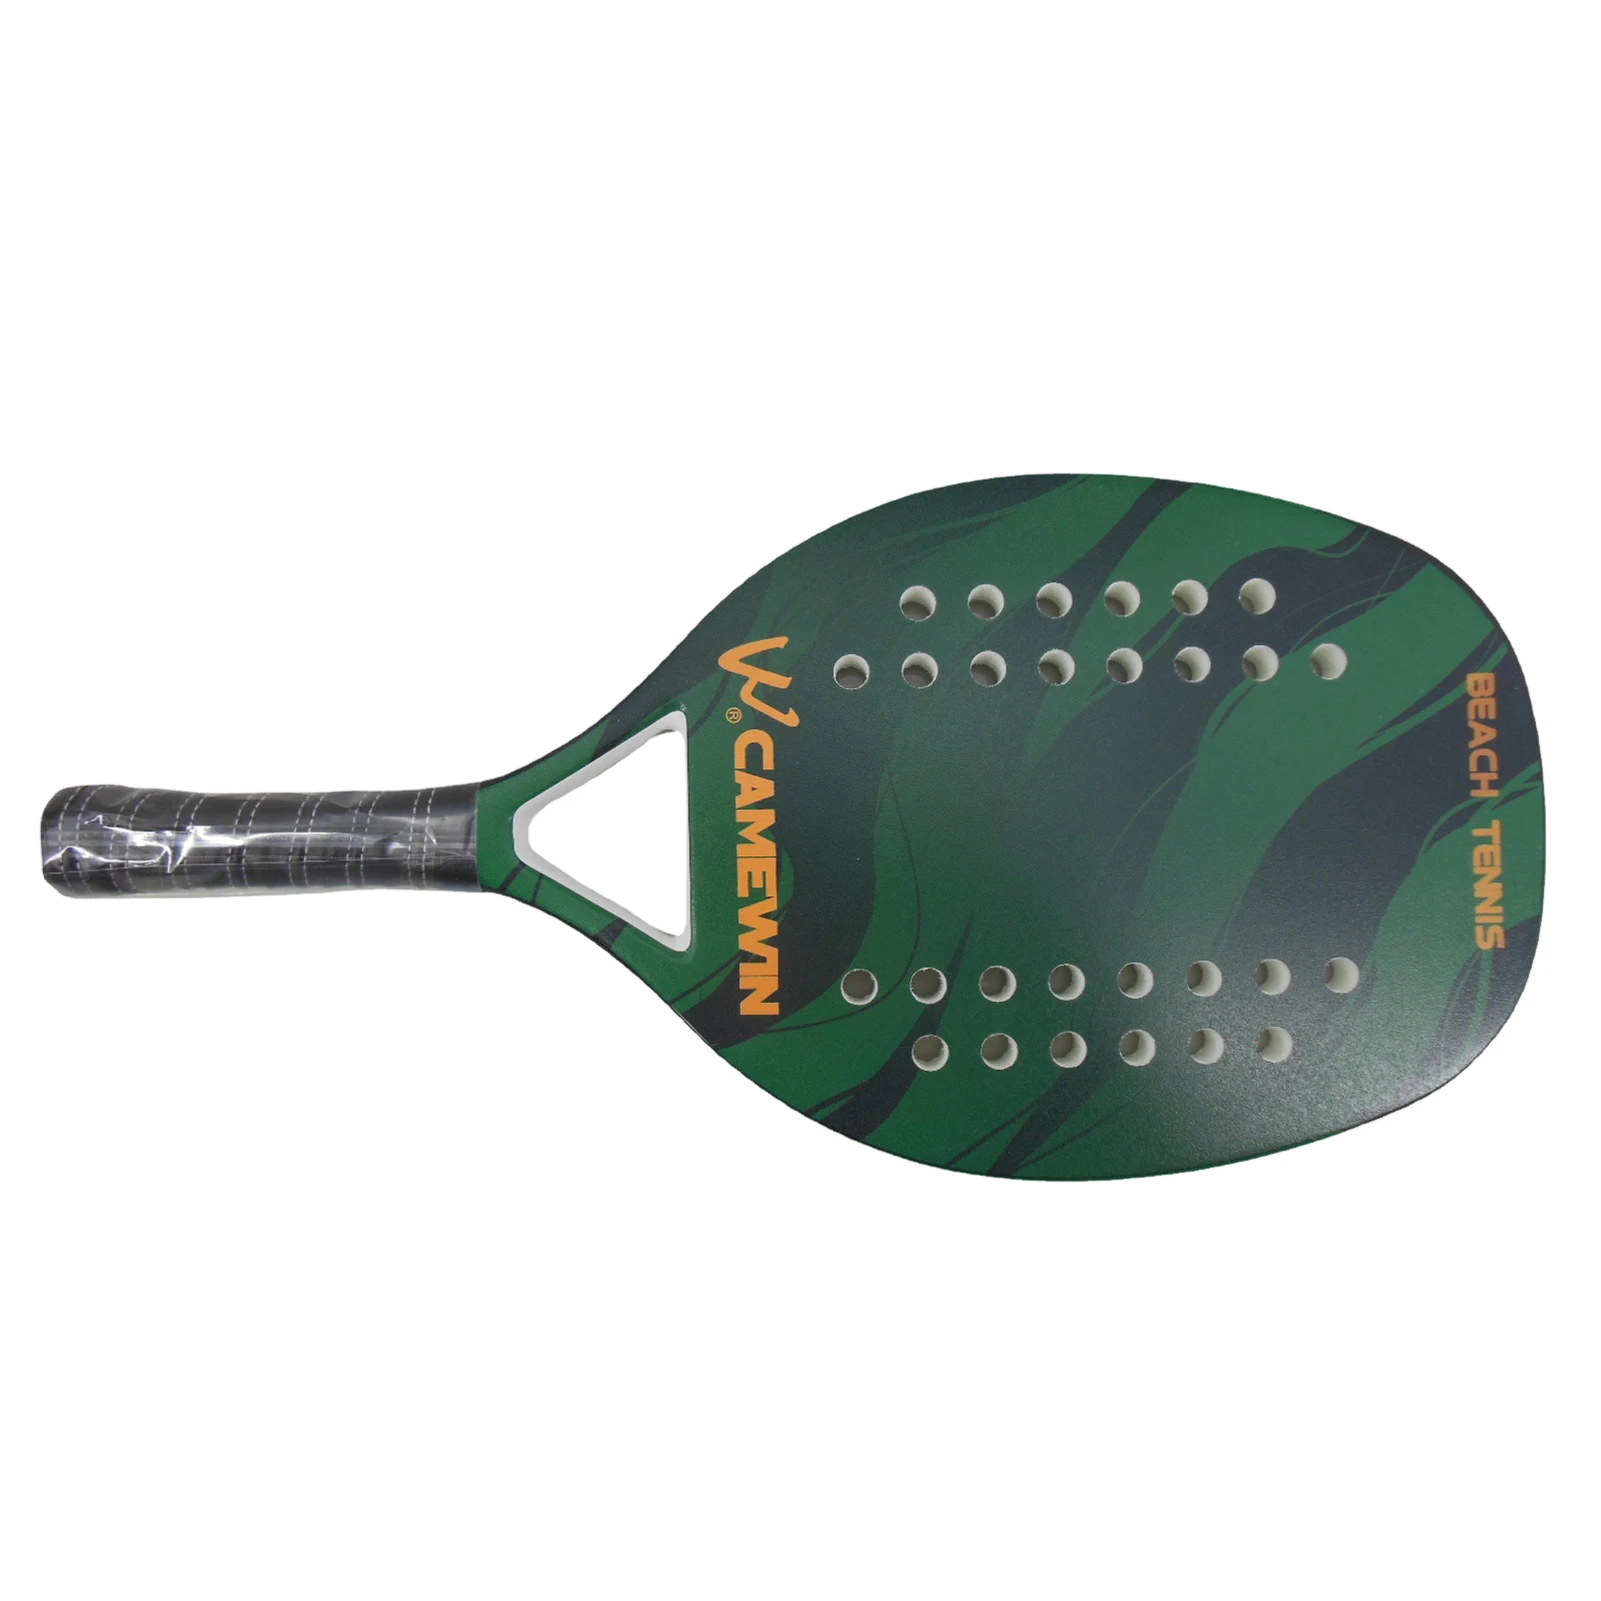 

BeachTennis Racket BeachTennis Paddle With Bag Paddle Tennis Rackets With Carry Bag Carbon Fiber Grit Face With Eva Memory Foam